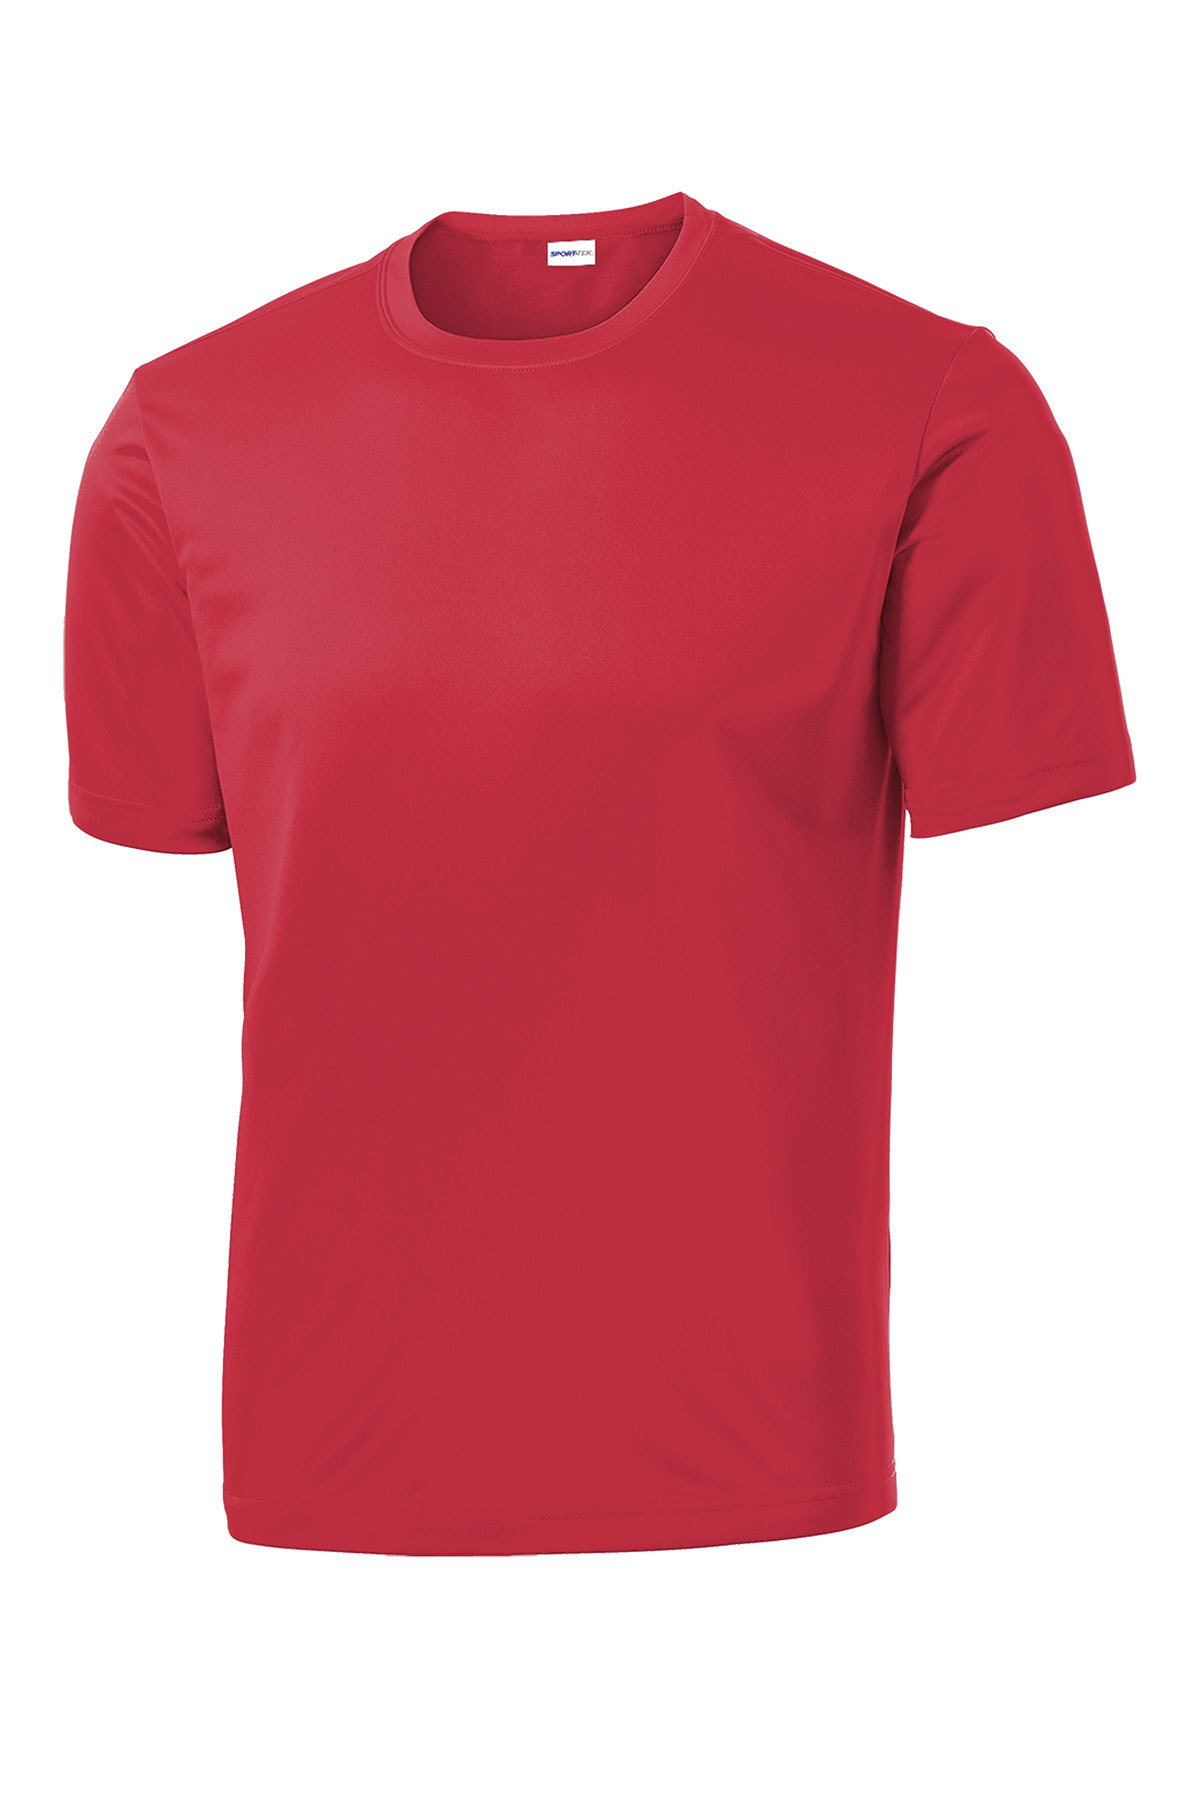 ST350-Short sleeve Moisture wicking T-Shirt with left chest logo